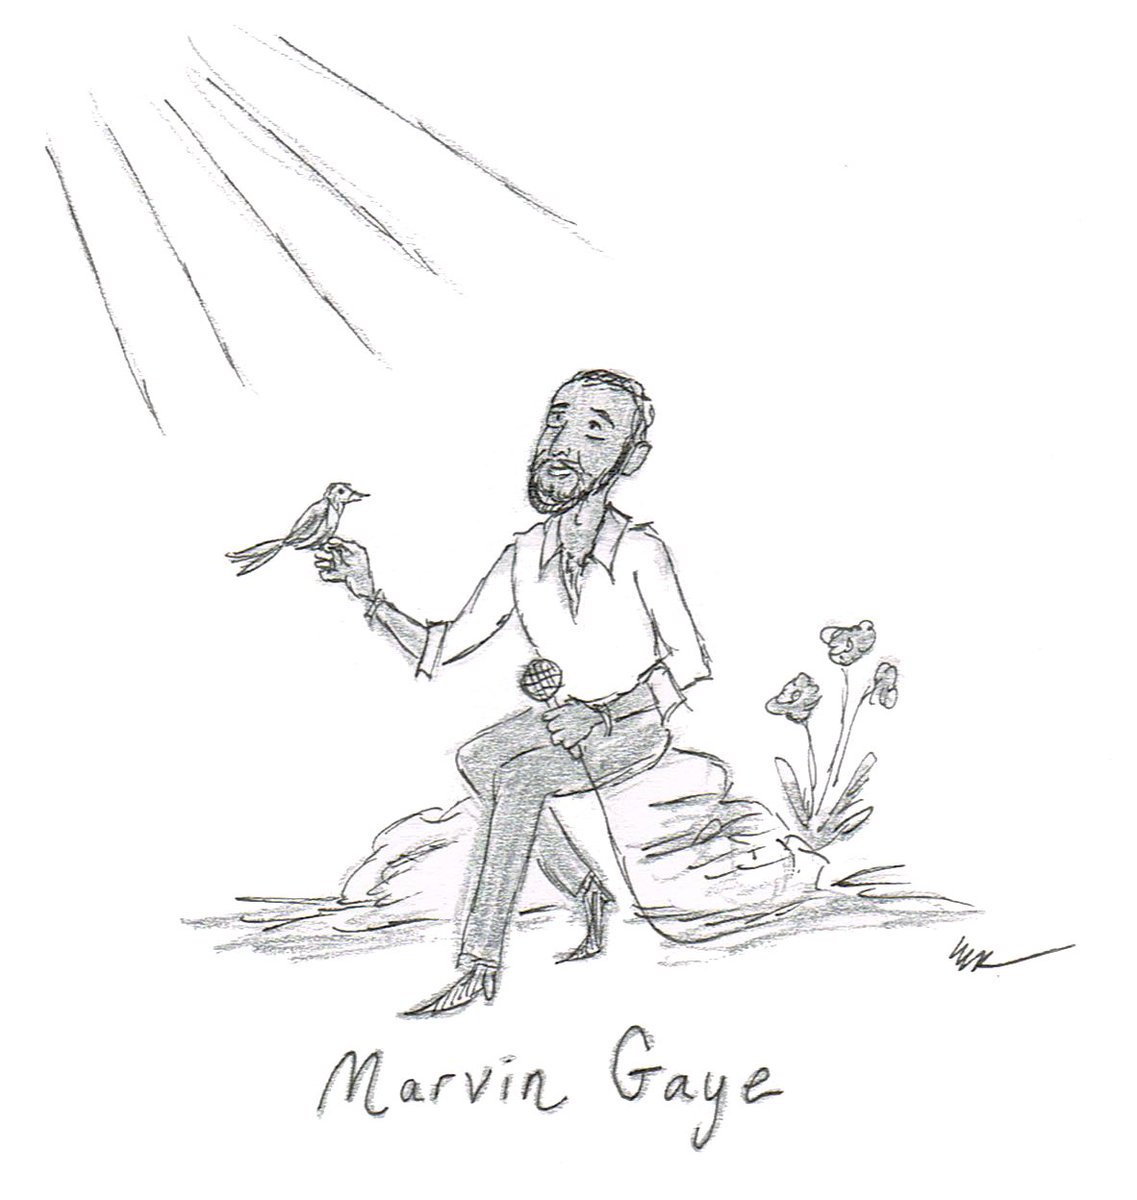 Marvin Gaye by Lorin Morgan-Richards
@lorin_morgan_richards 

#lorinmorganrichards #marvingaye #artiststhatinspire 
lorinrichards.com